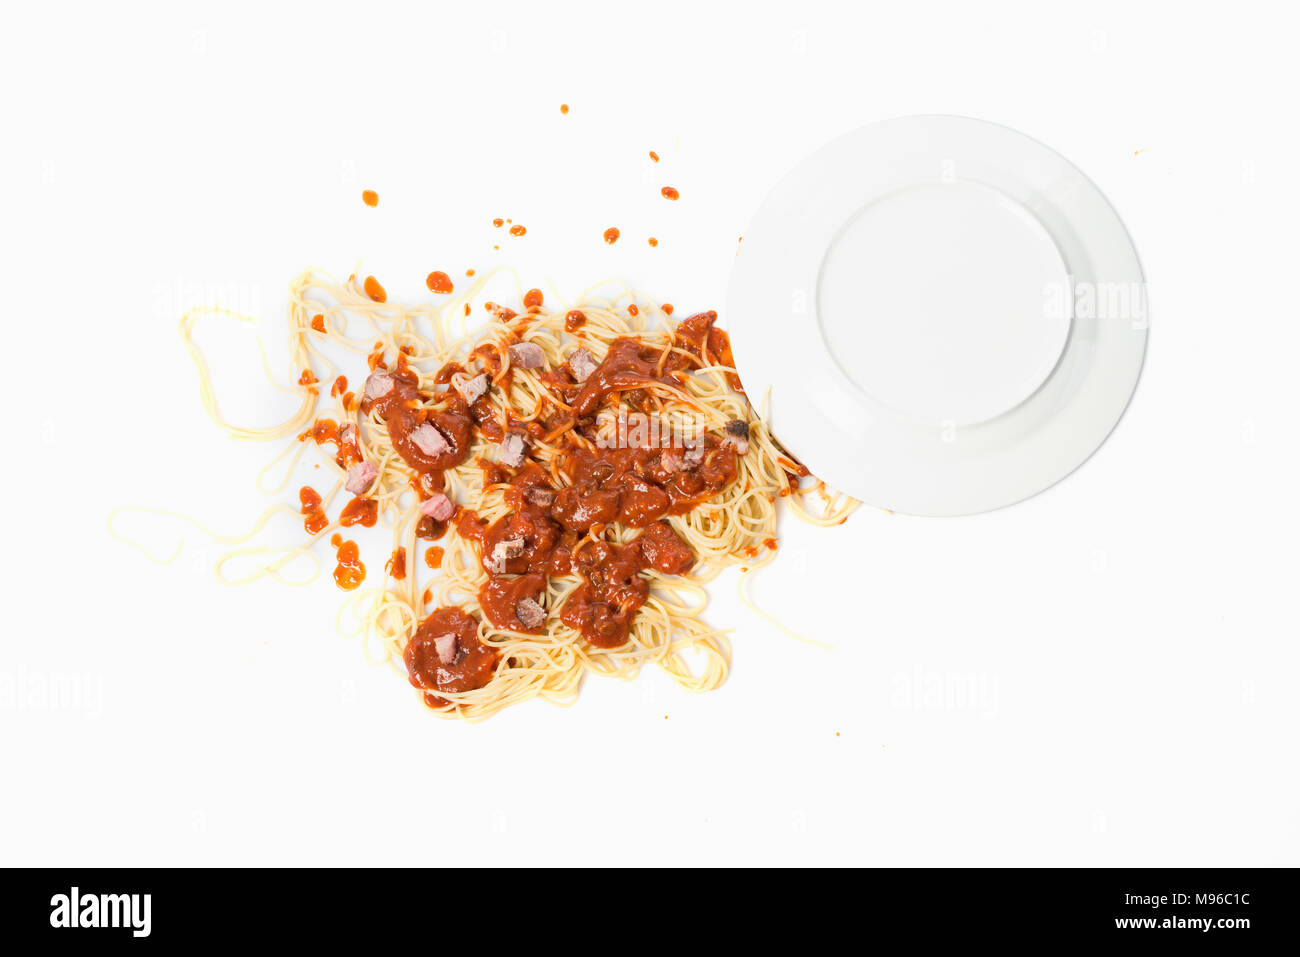 A fallen dish of pasta on the floor Stock Photo